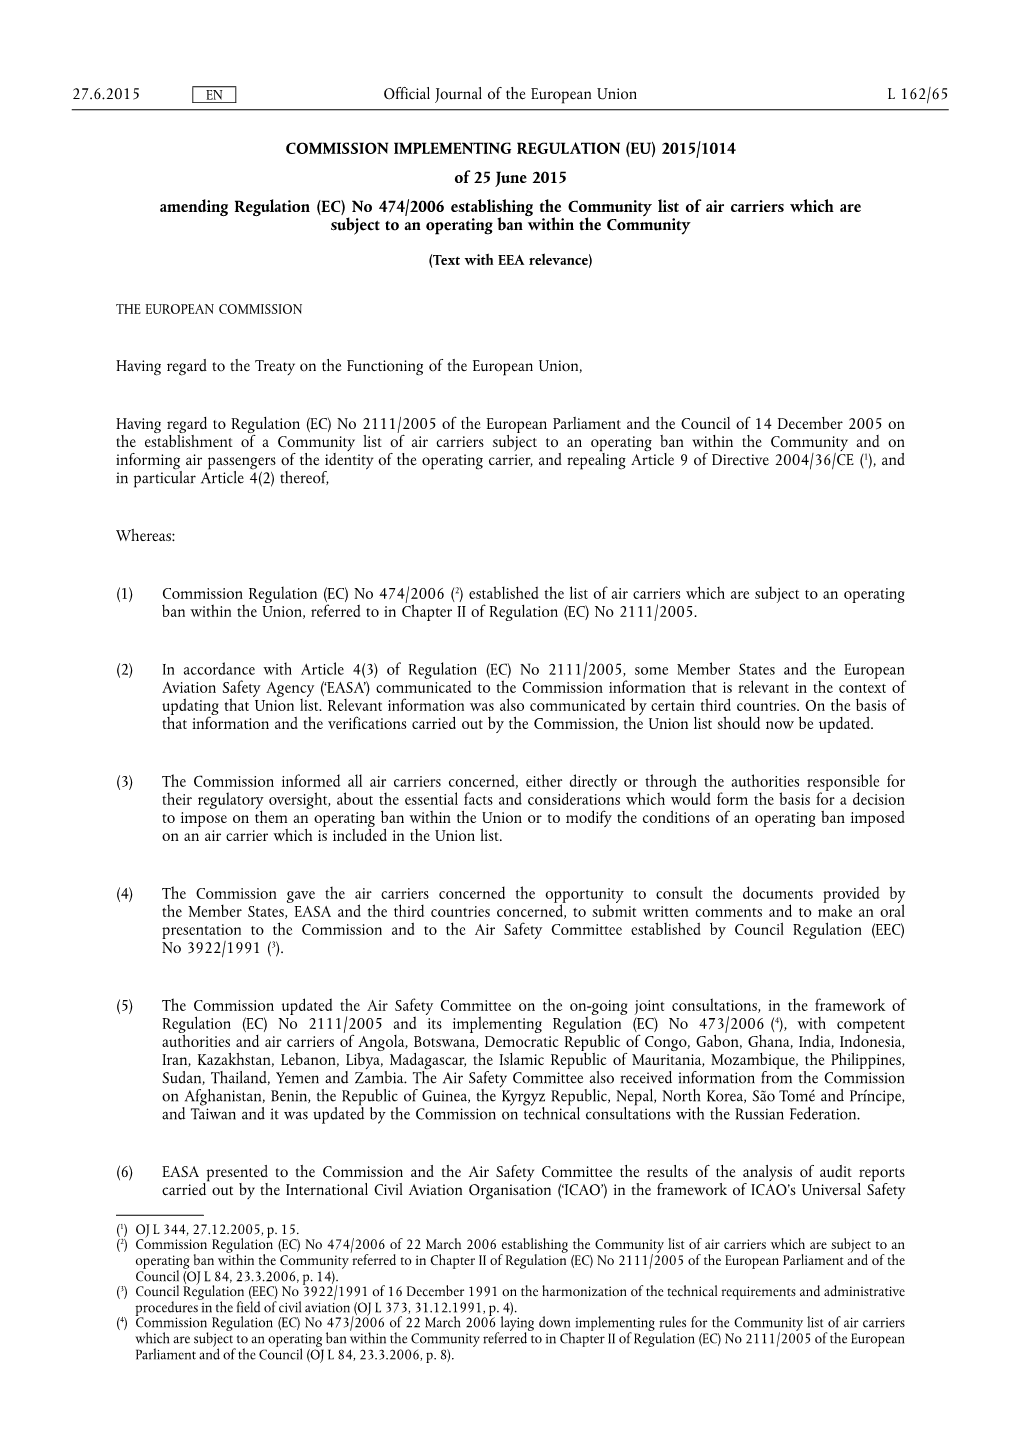 Commission Implementing Regulation (Eu) 2015/ 1014